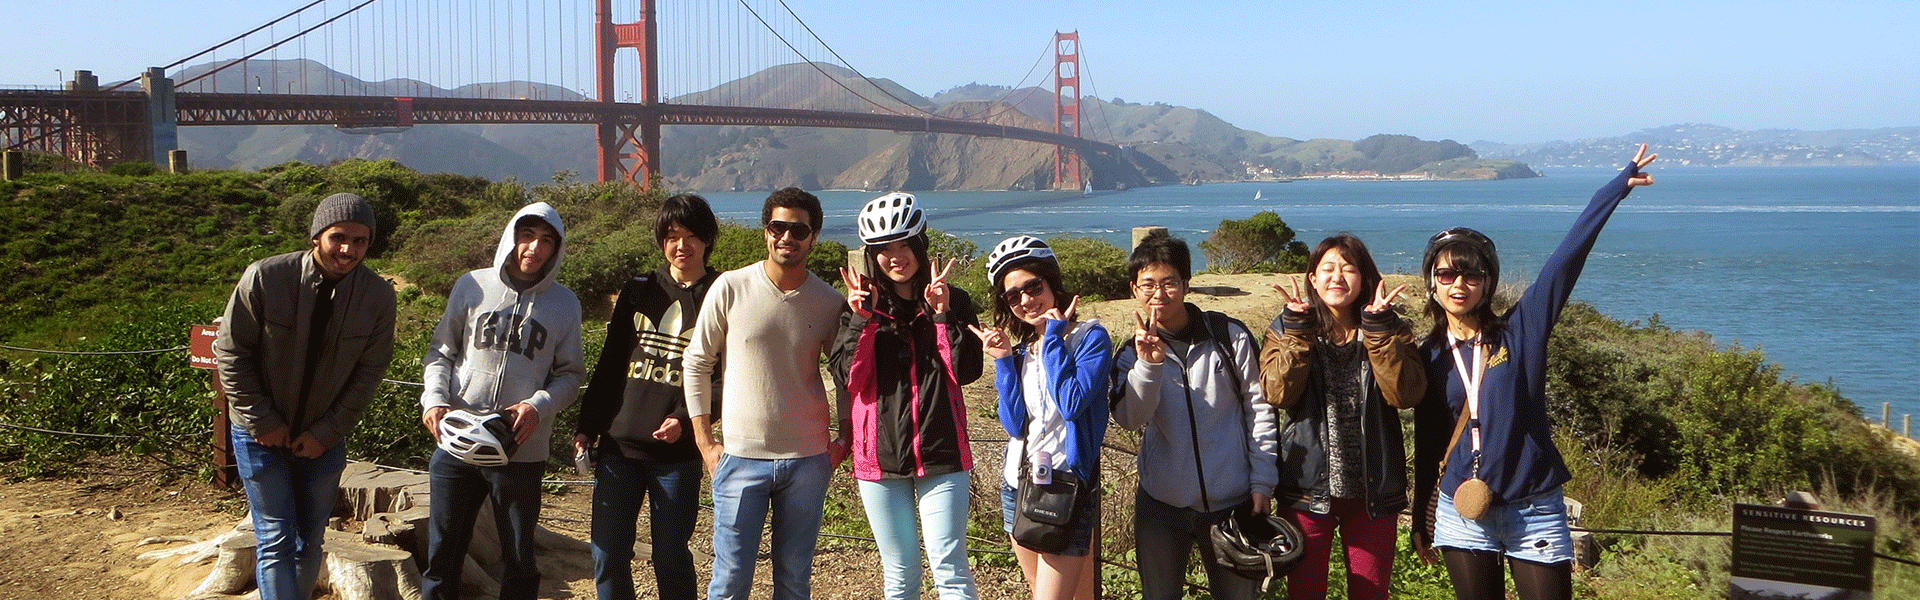 American Language Institute students at the Golden Gate Bridge